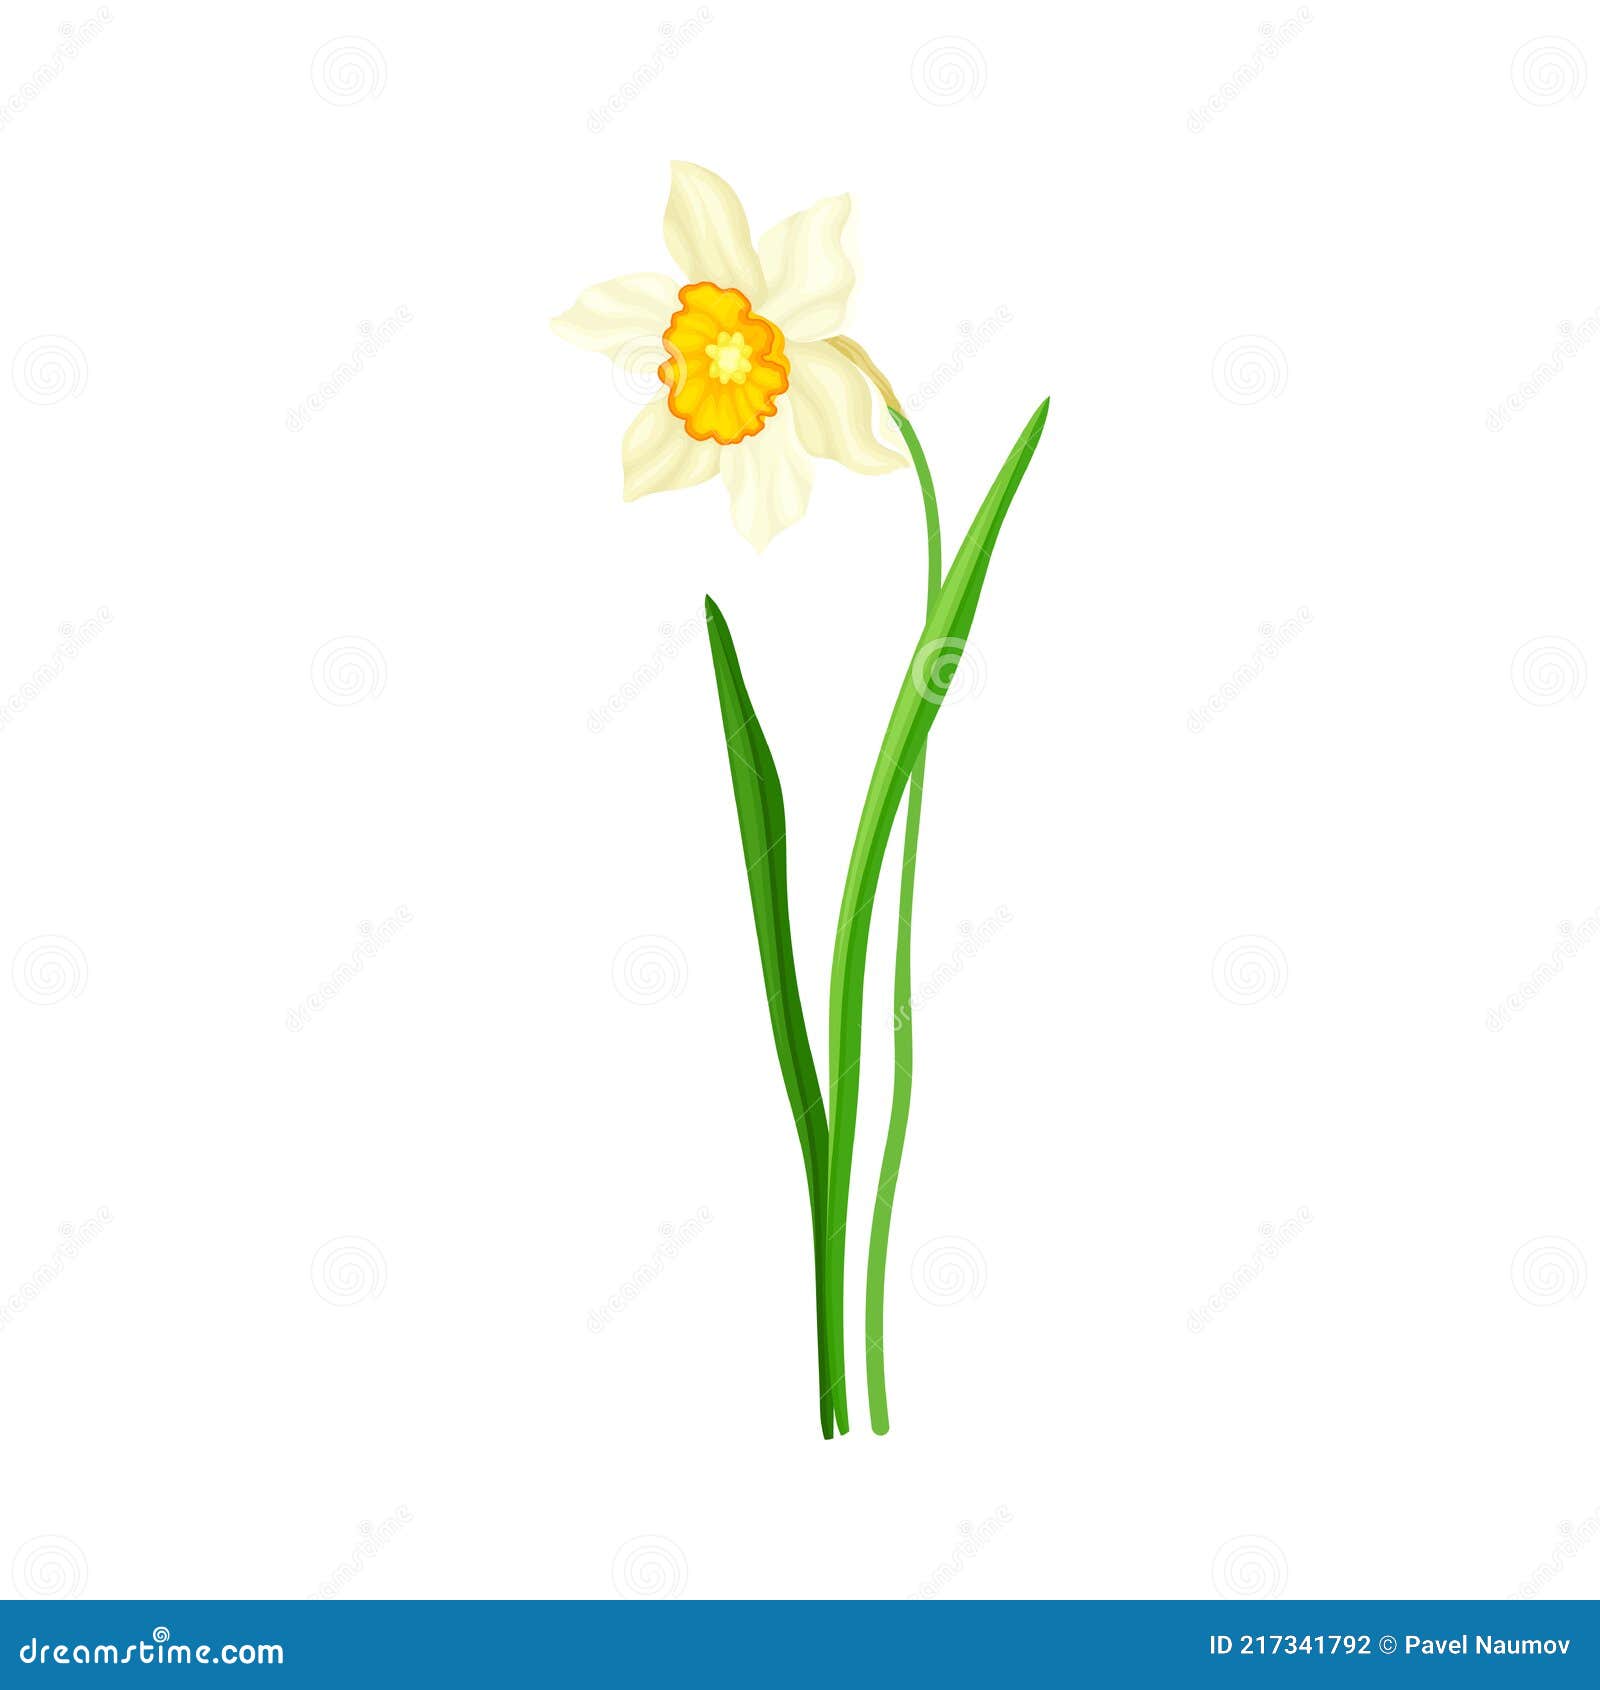 White Flower of Narcissus Spring Flowering Perennial Plant on Leafless ...